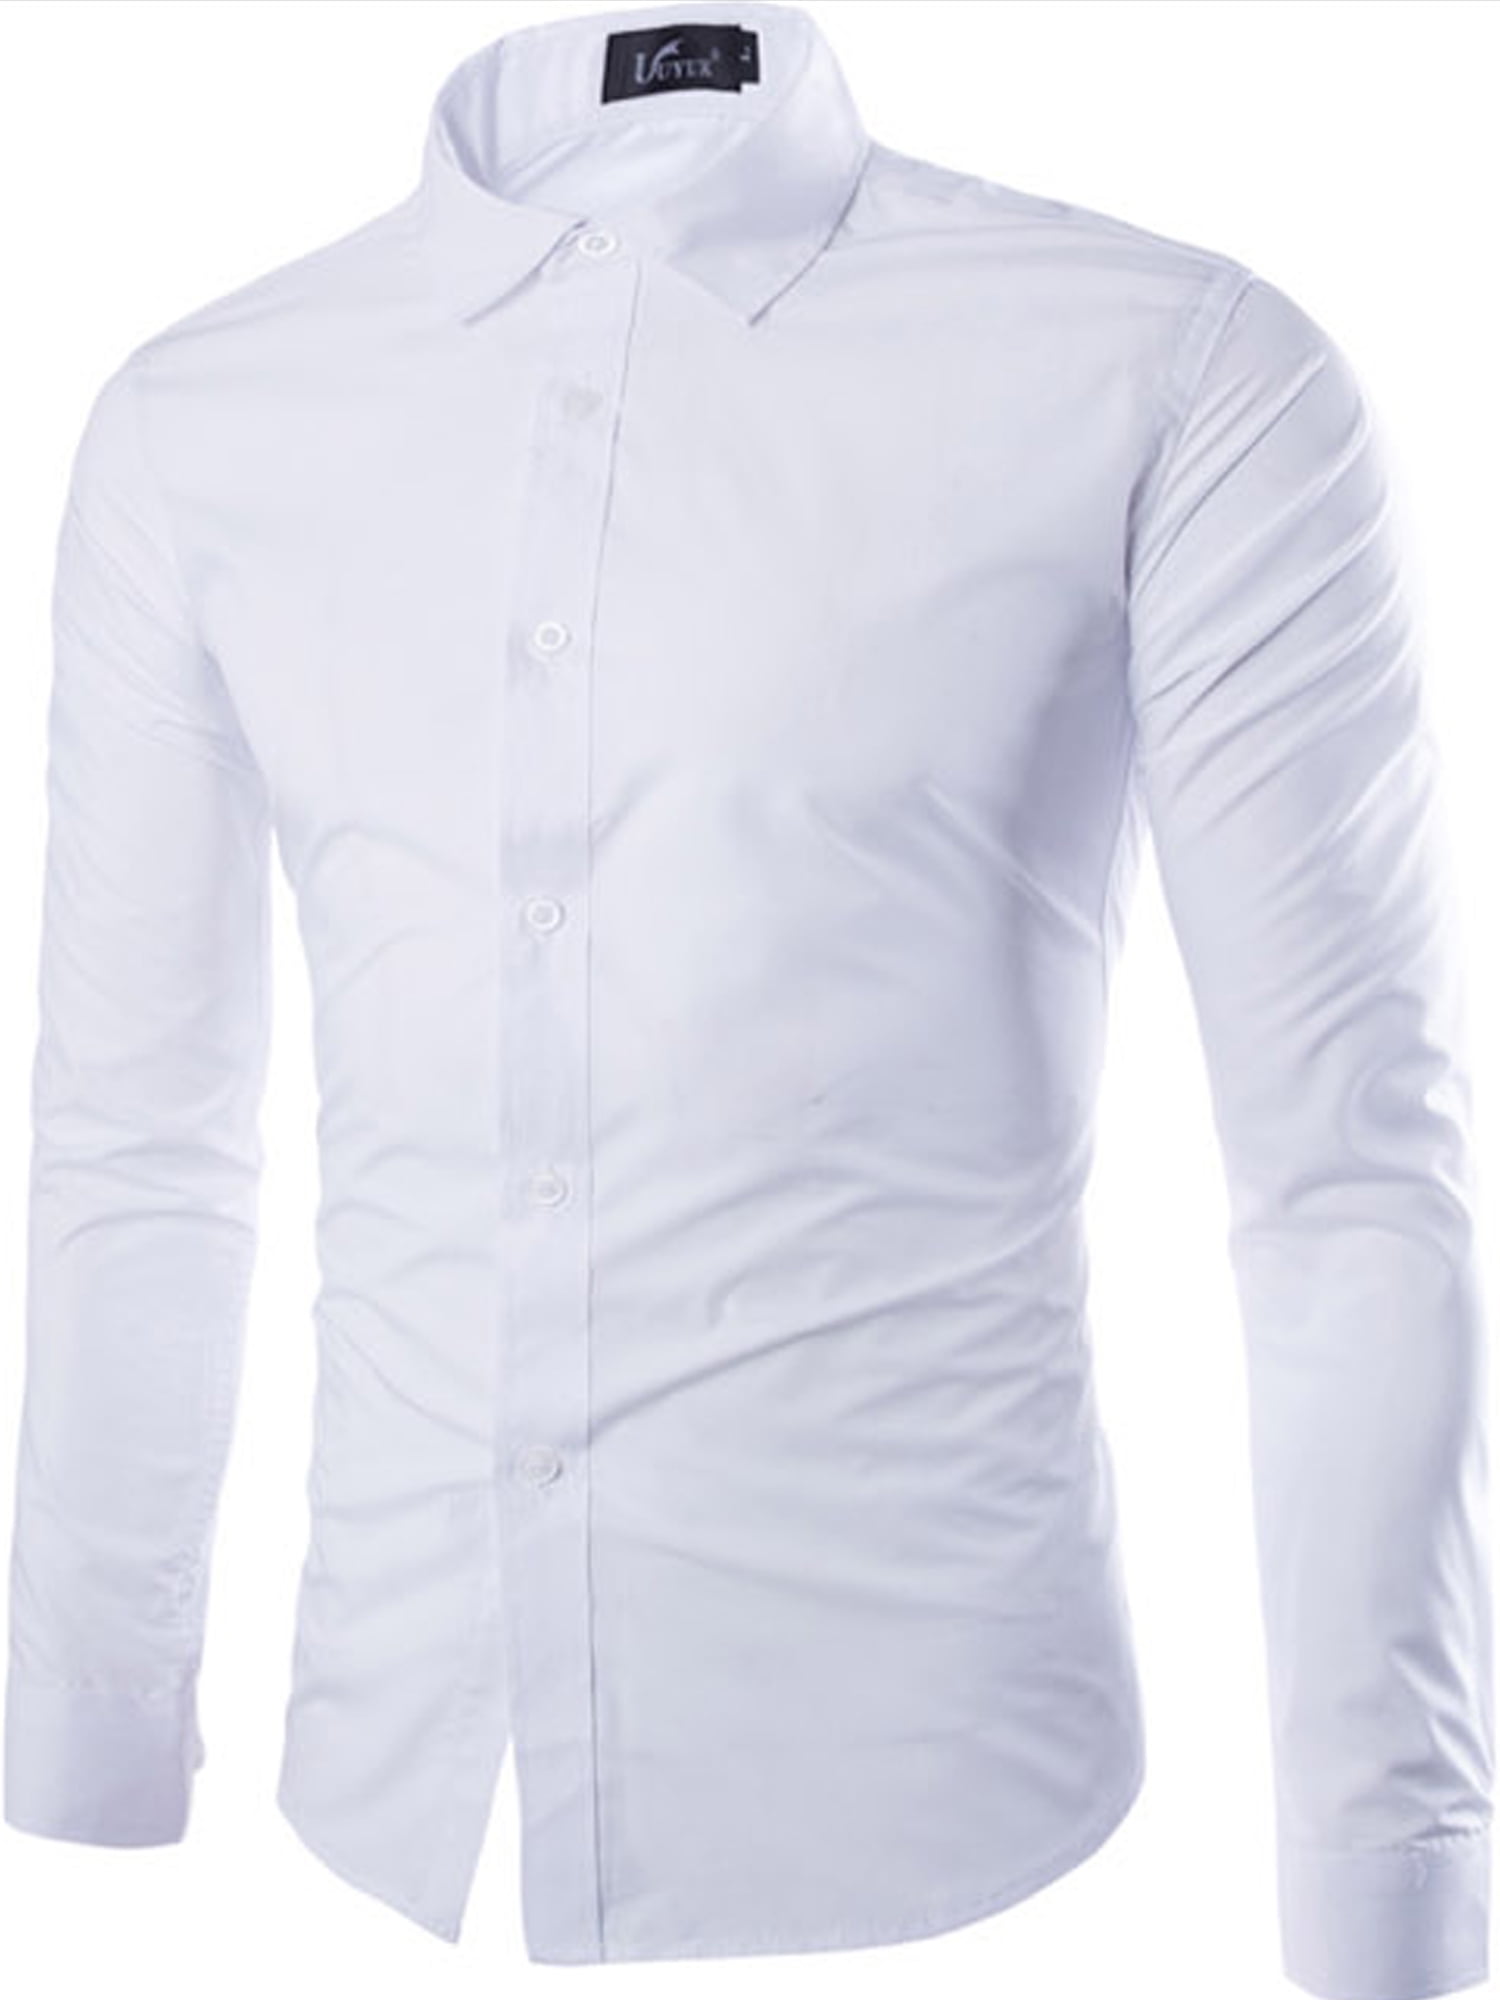 MERSARIPHY Men's Slim Fit Shirt Long Sleeve Dress Shirts - Walmart.com